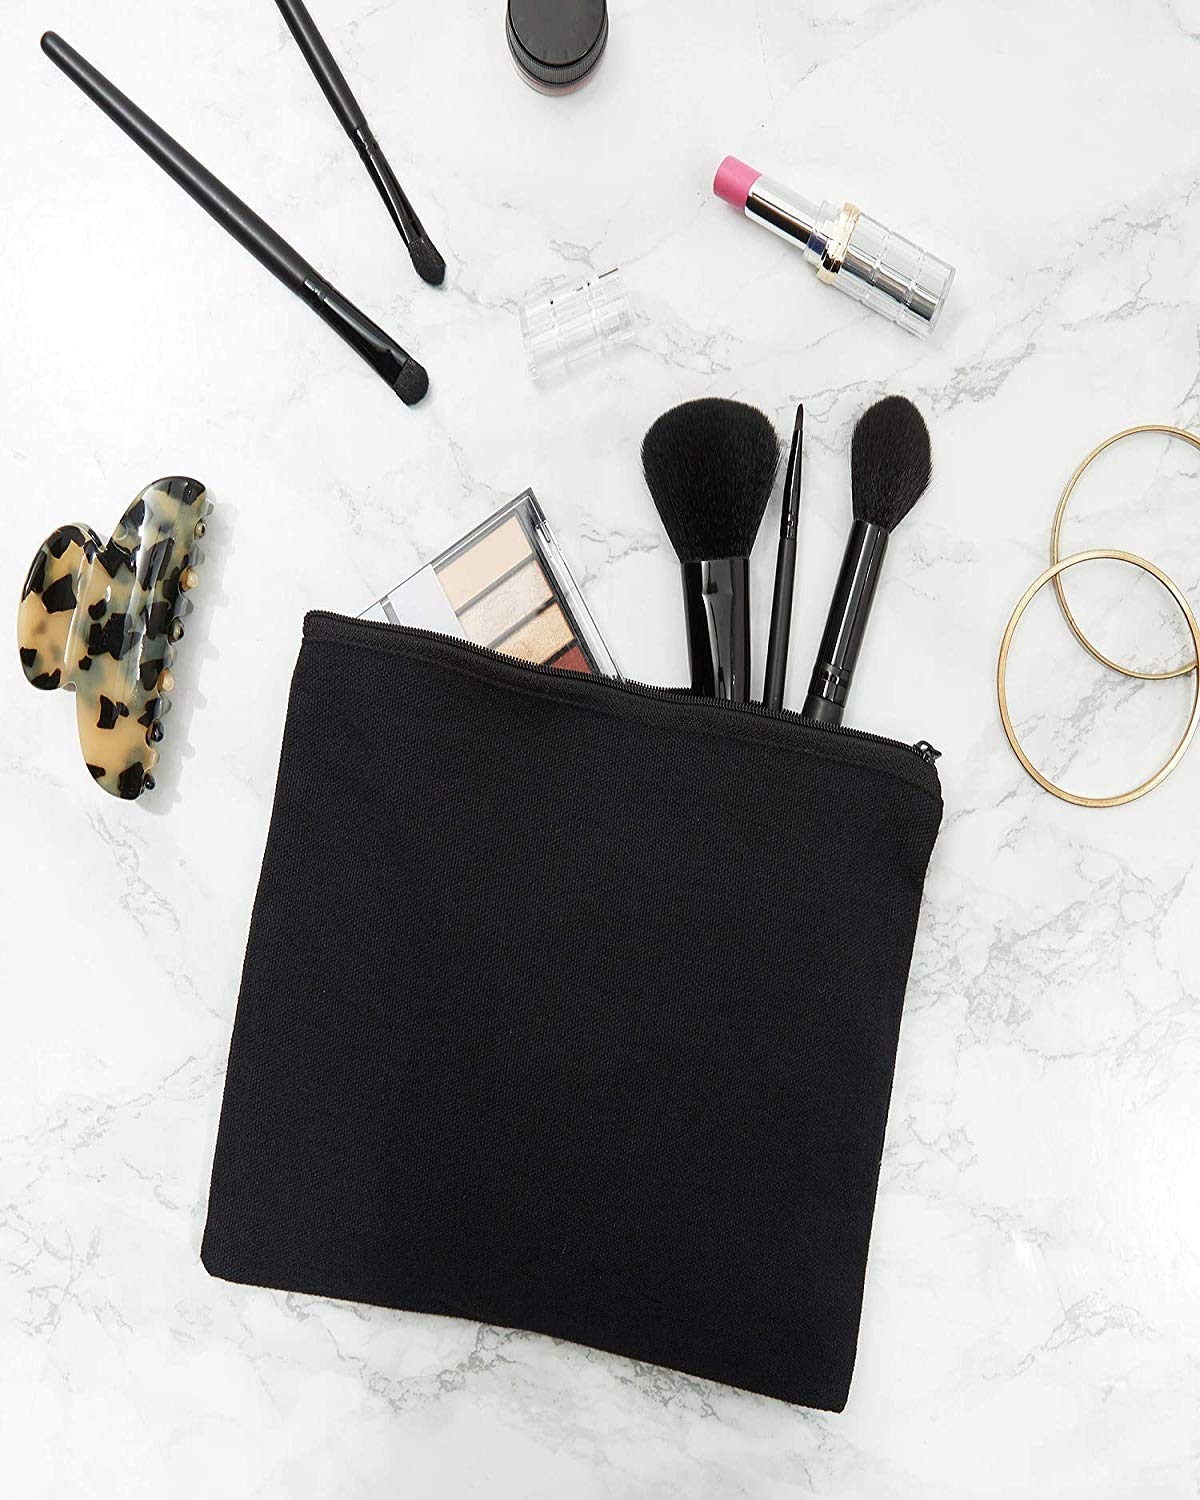 NJ Cosmetic Bag Multipurpose Makeup Bag with Zipper Canvas Bag, Travel Toiletry Pouch DIY Bag, Jewelry Bag, Travel Bag, Cosmetic Bag (5.5x5.5 Inches): 04 Pcs